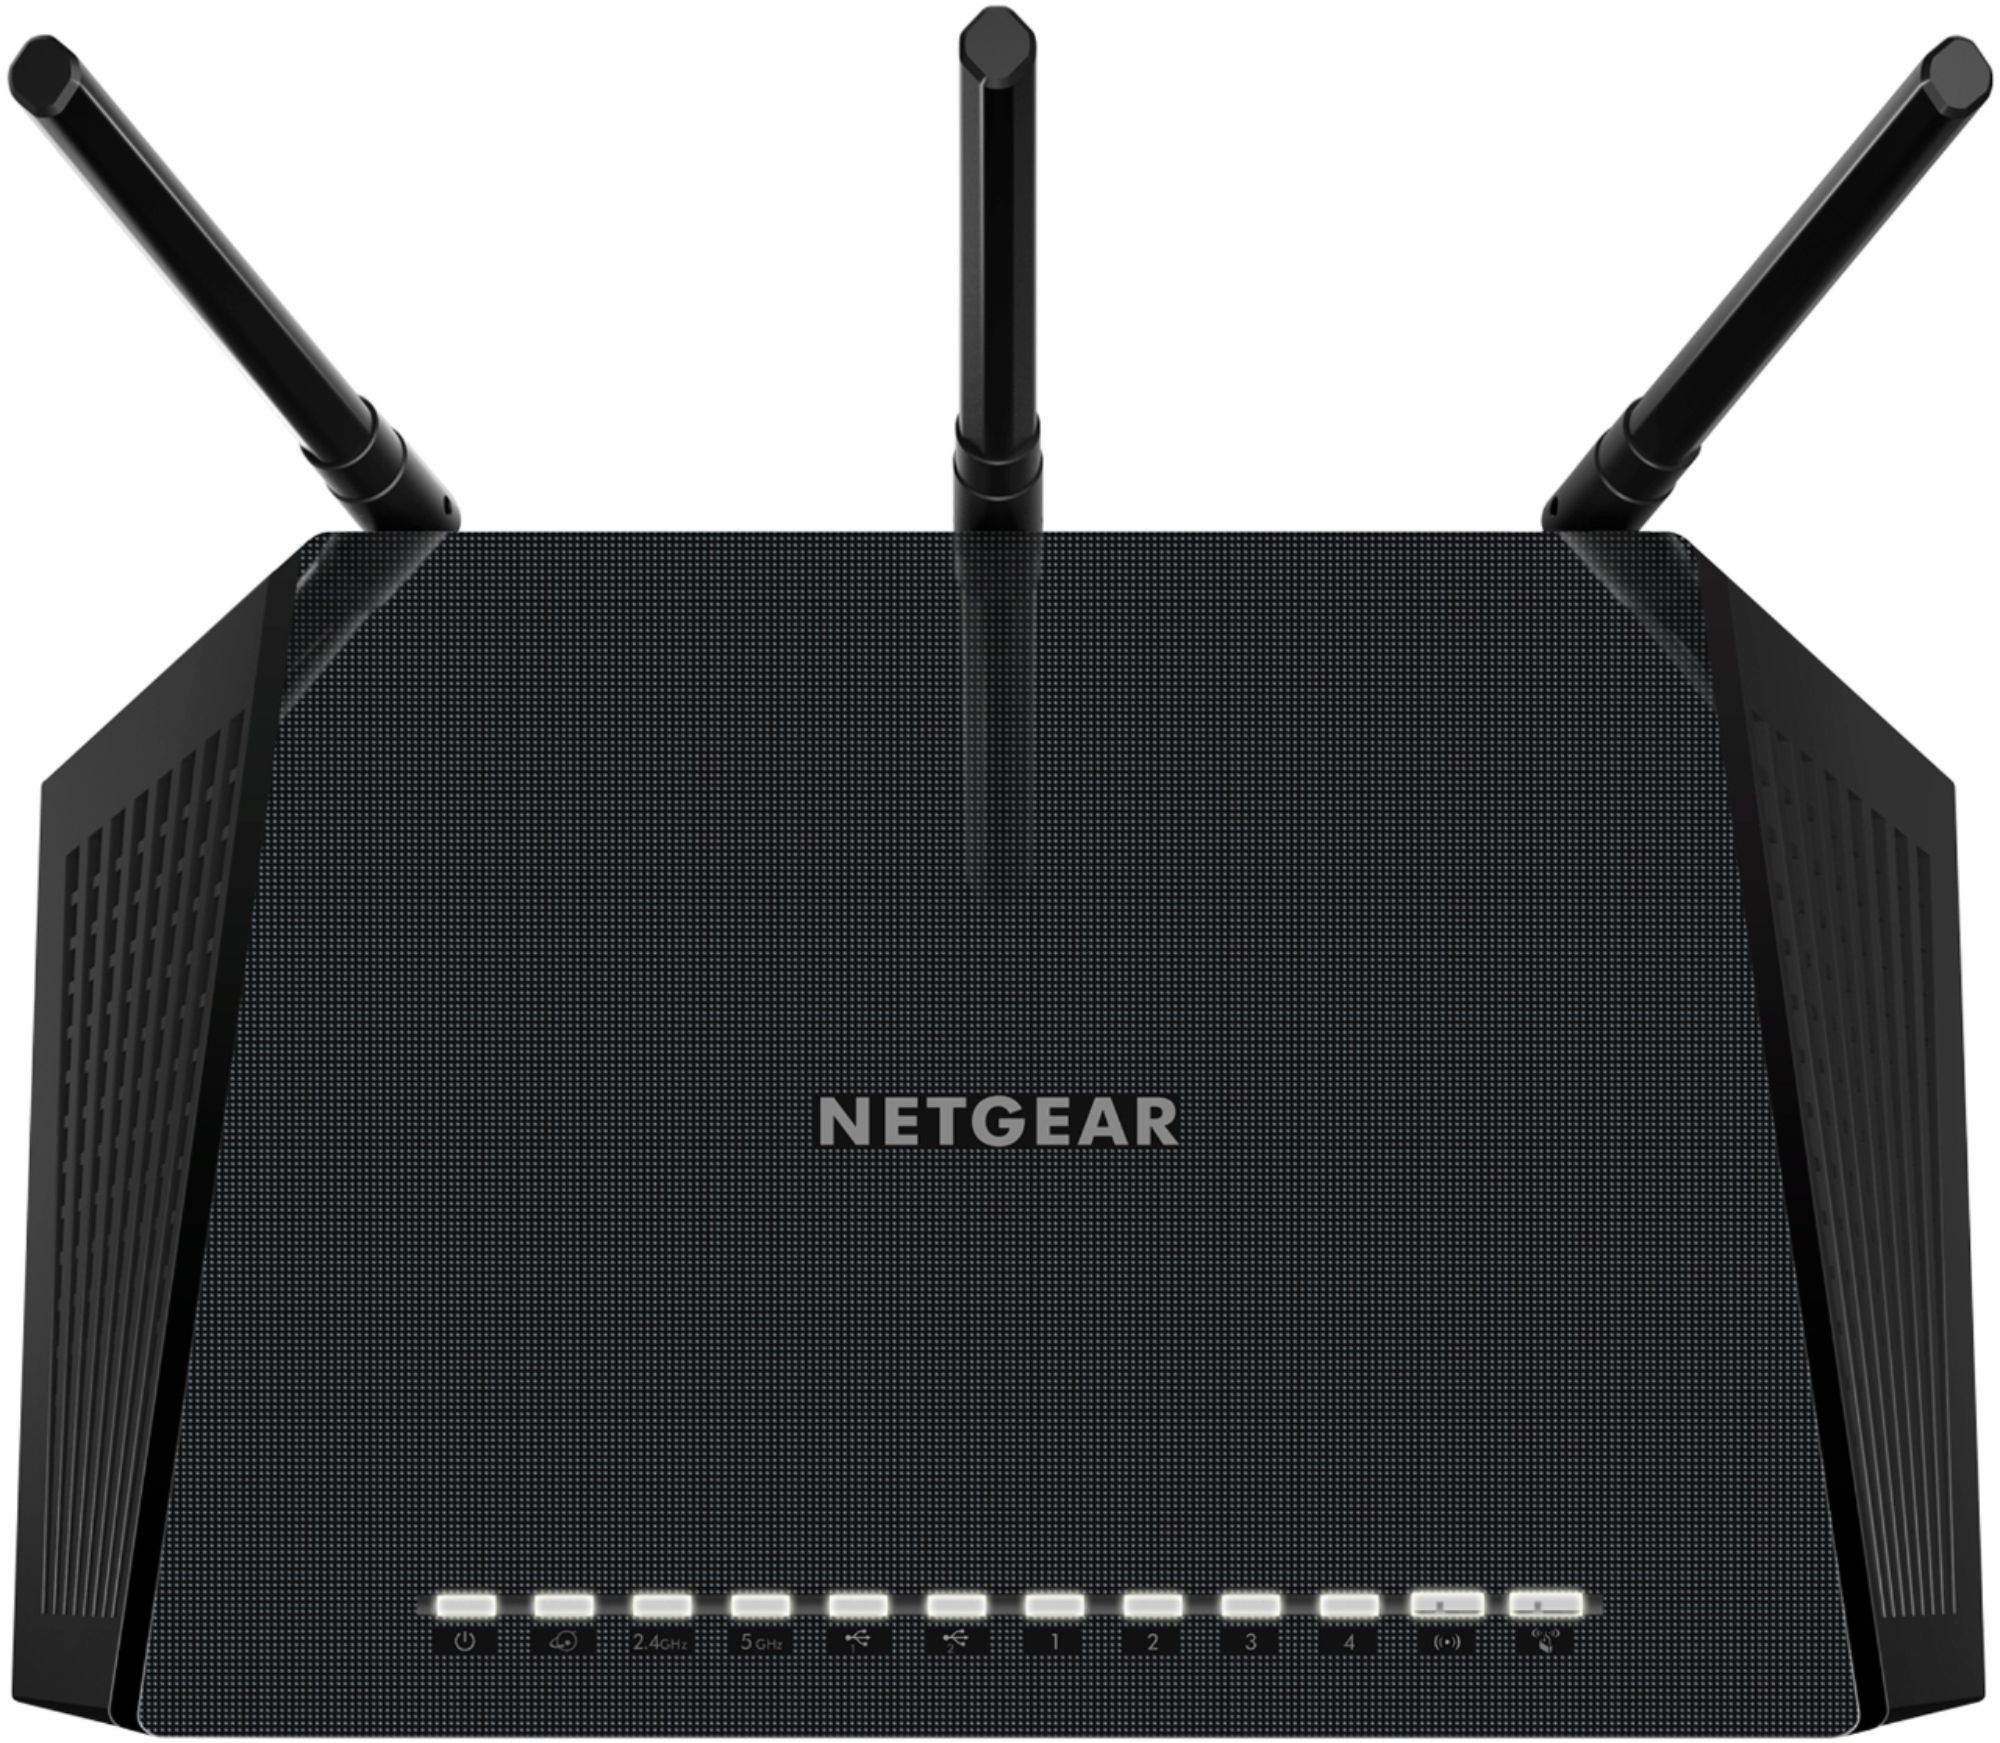 NETGEAR AC1750 Dual-Band Wi-Fi 5 Router Black R6400-100NAS - Best Buy